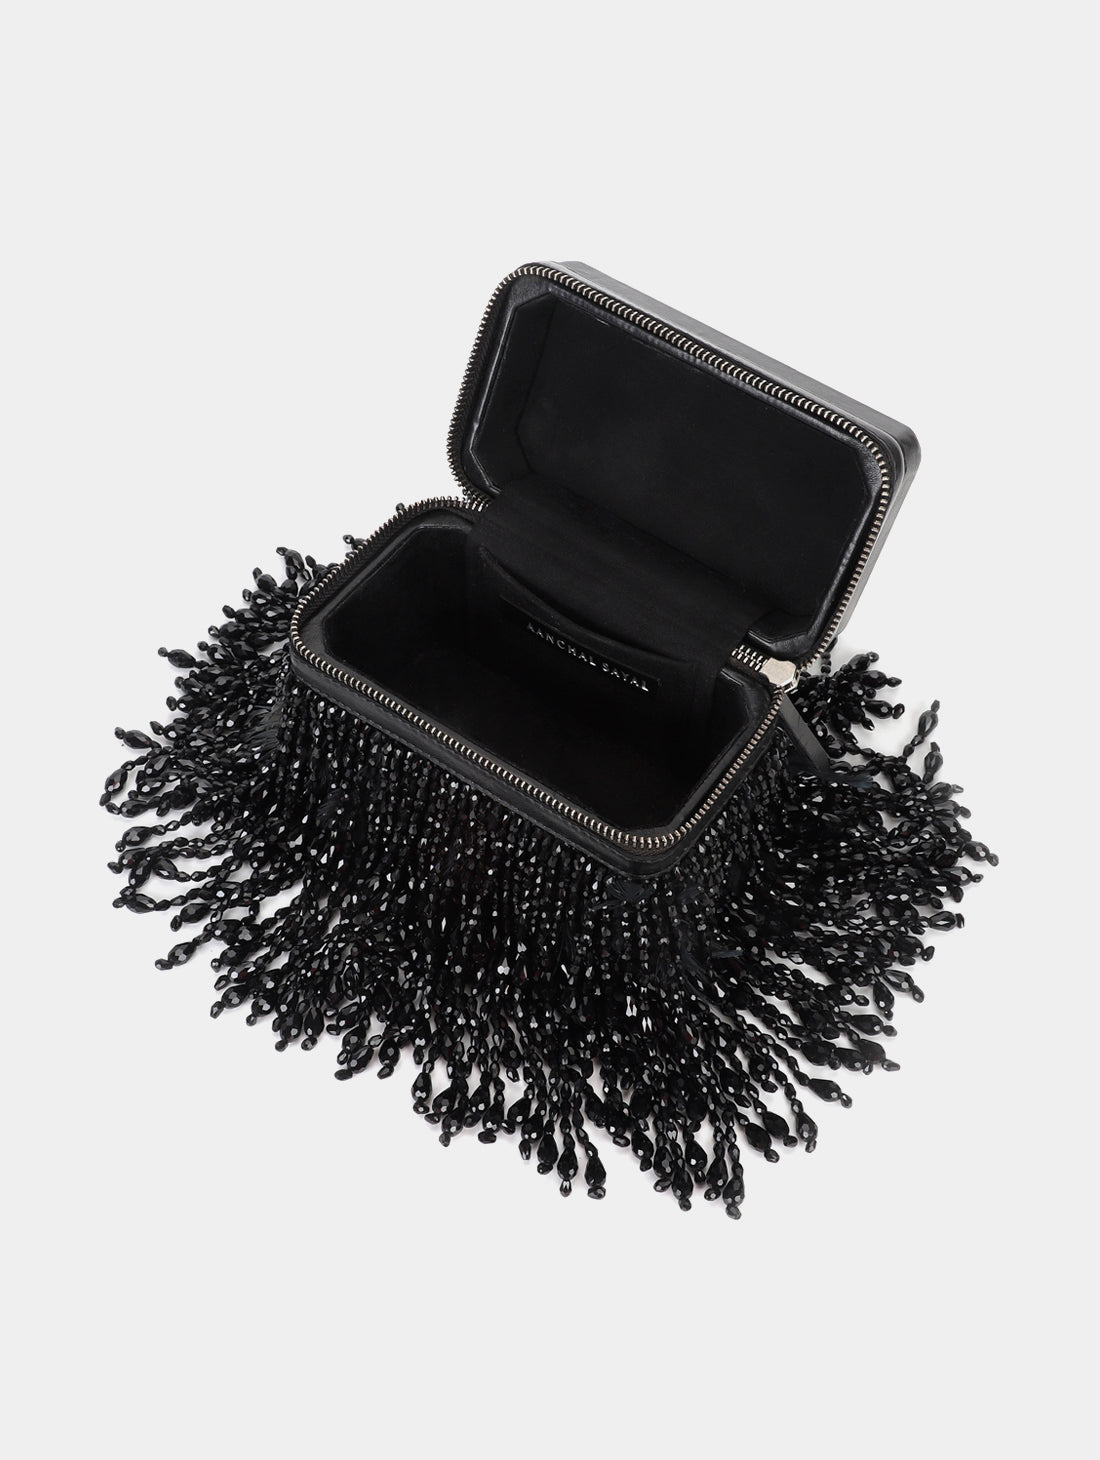 Premium Black Crystal Beaded & Embellished Box Handbag